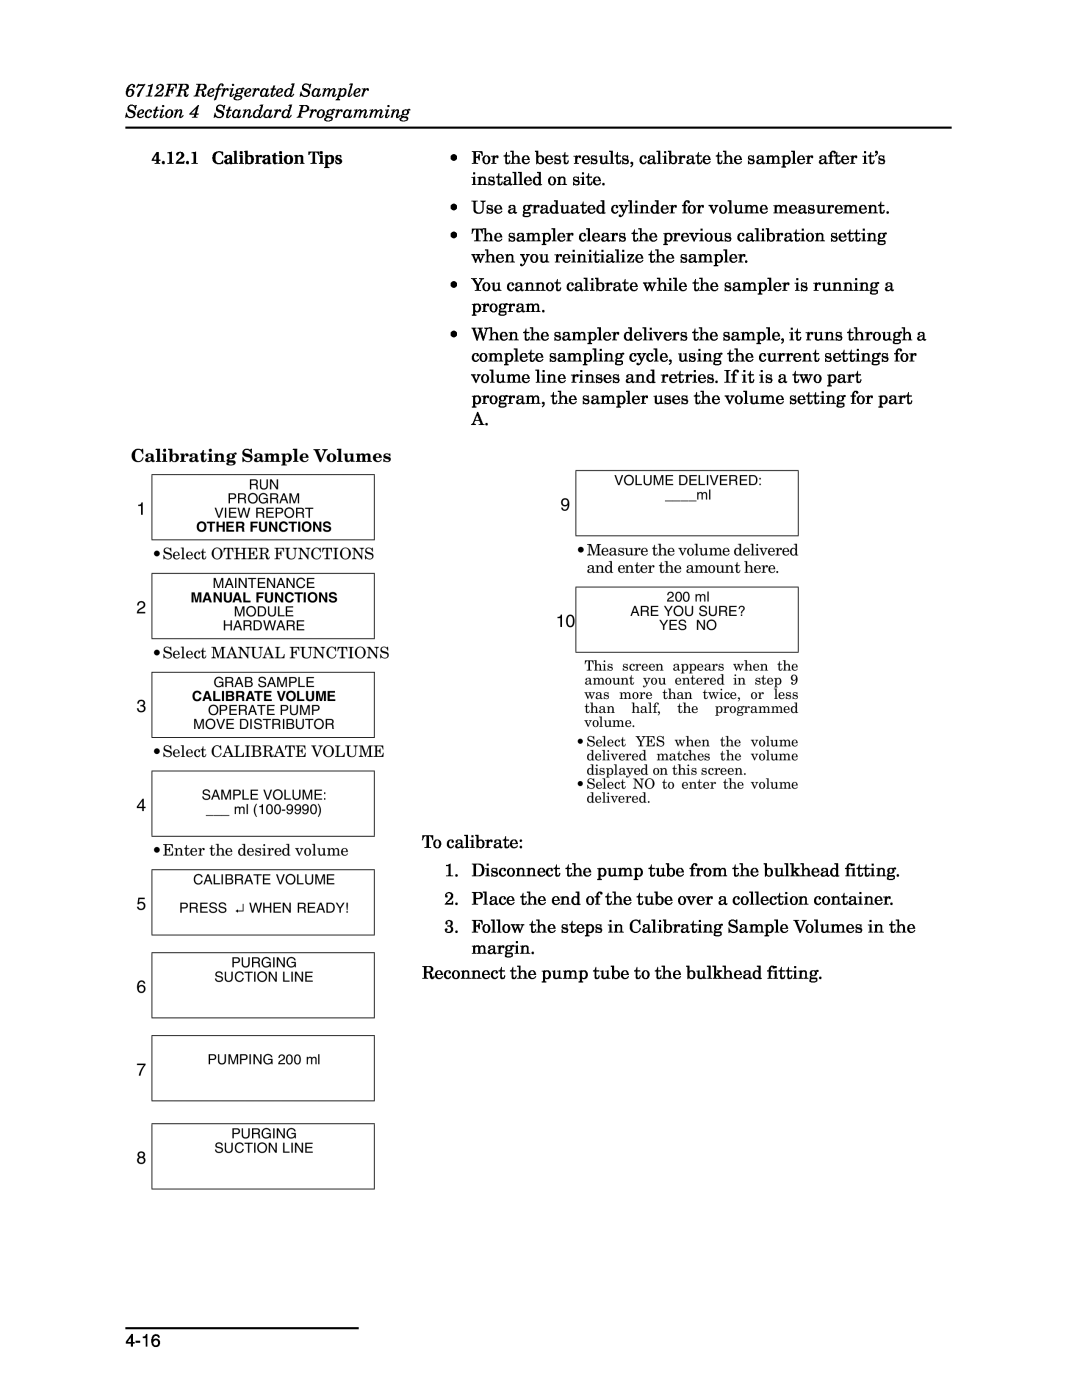 Teledyne manual 6712FR Refrigerated Sampler, Section, Standard Programming, 4.12.1, Calibration Tips 